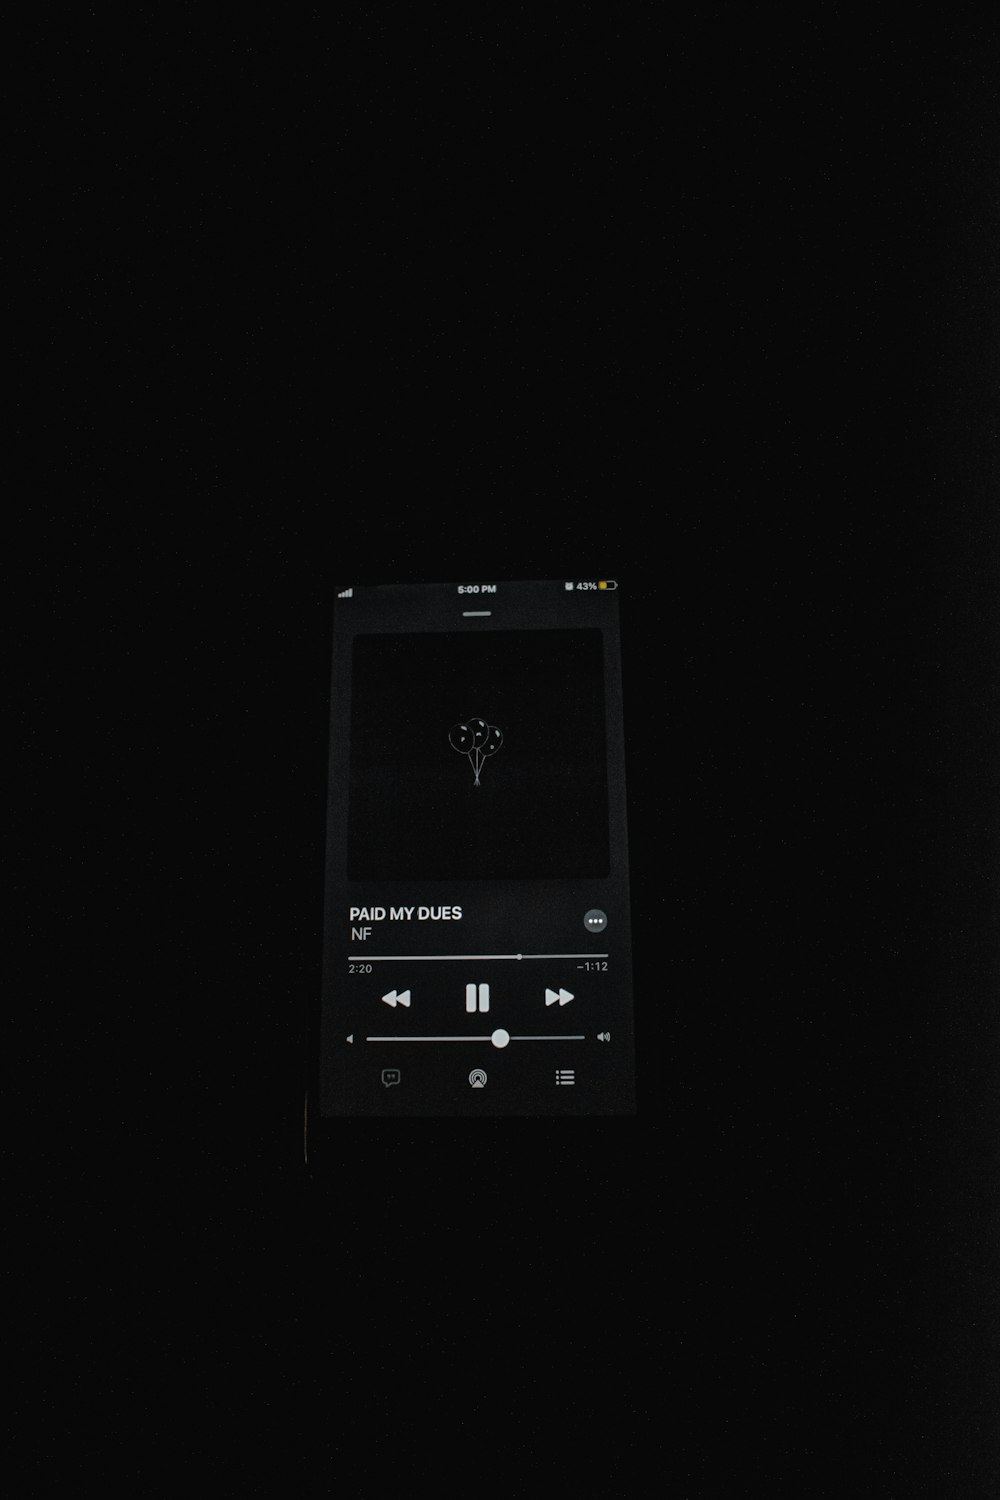 Foto teléfono inteligente negro que muestra una pantalla negra – Imagen  Negro gratis en Unsplash